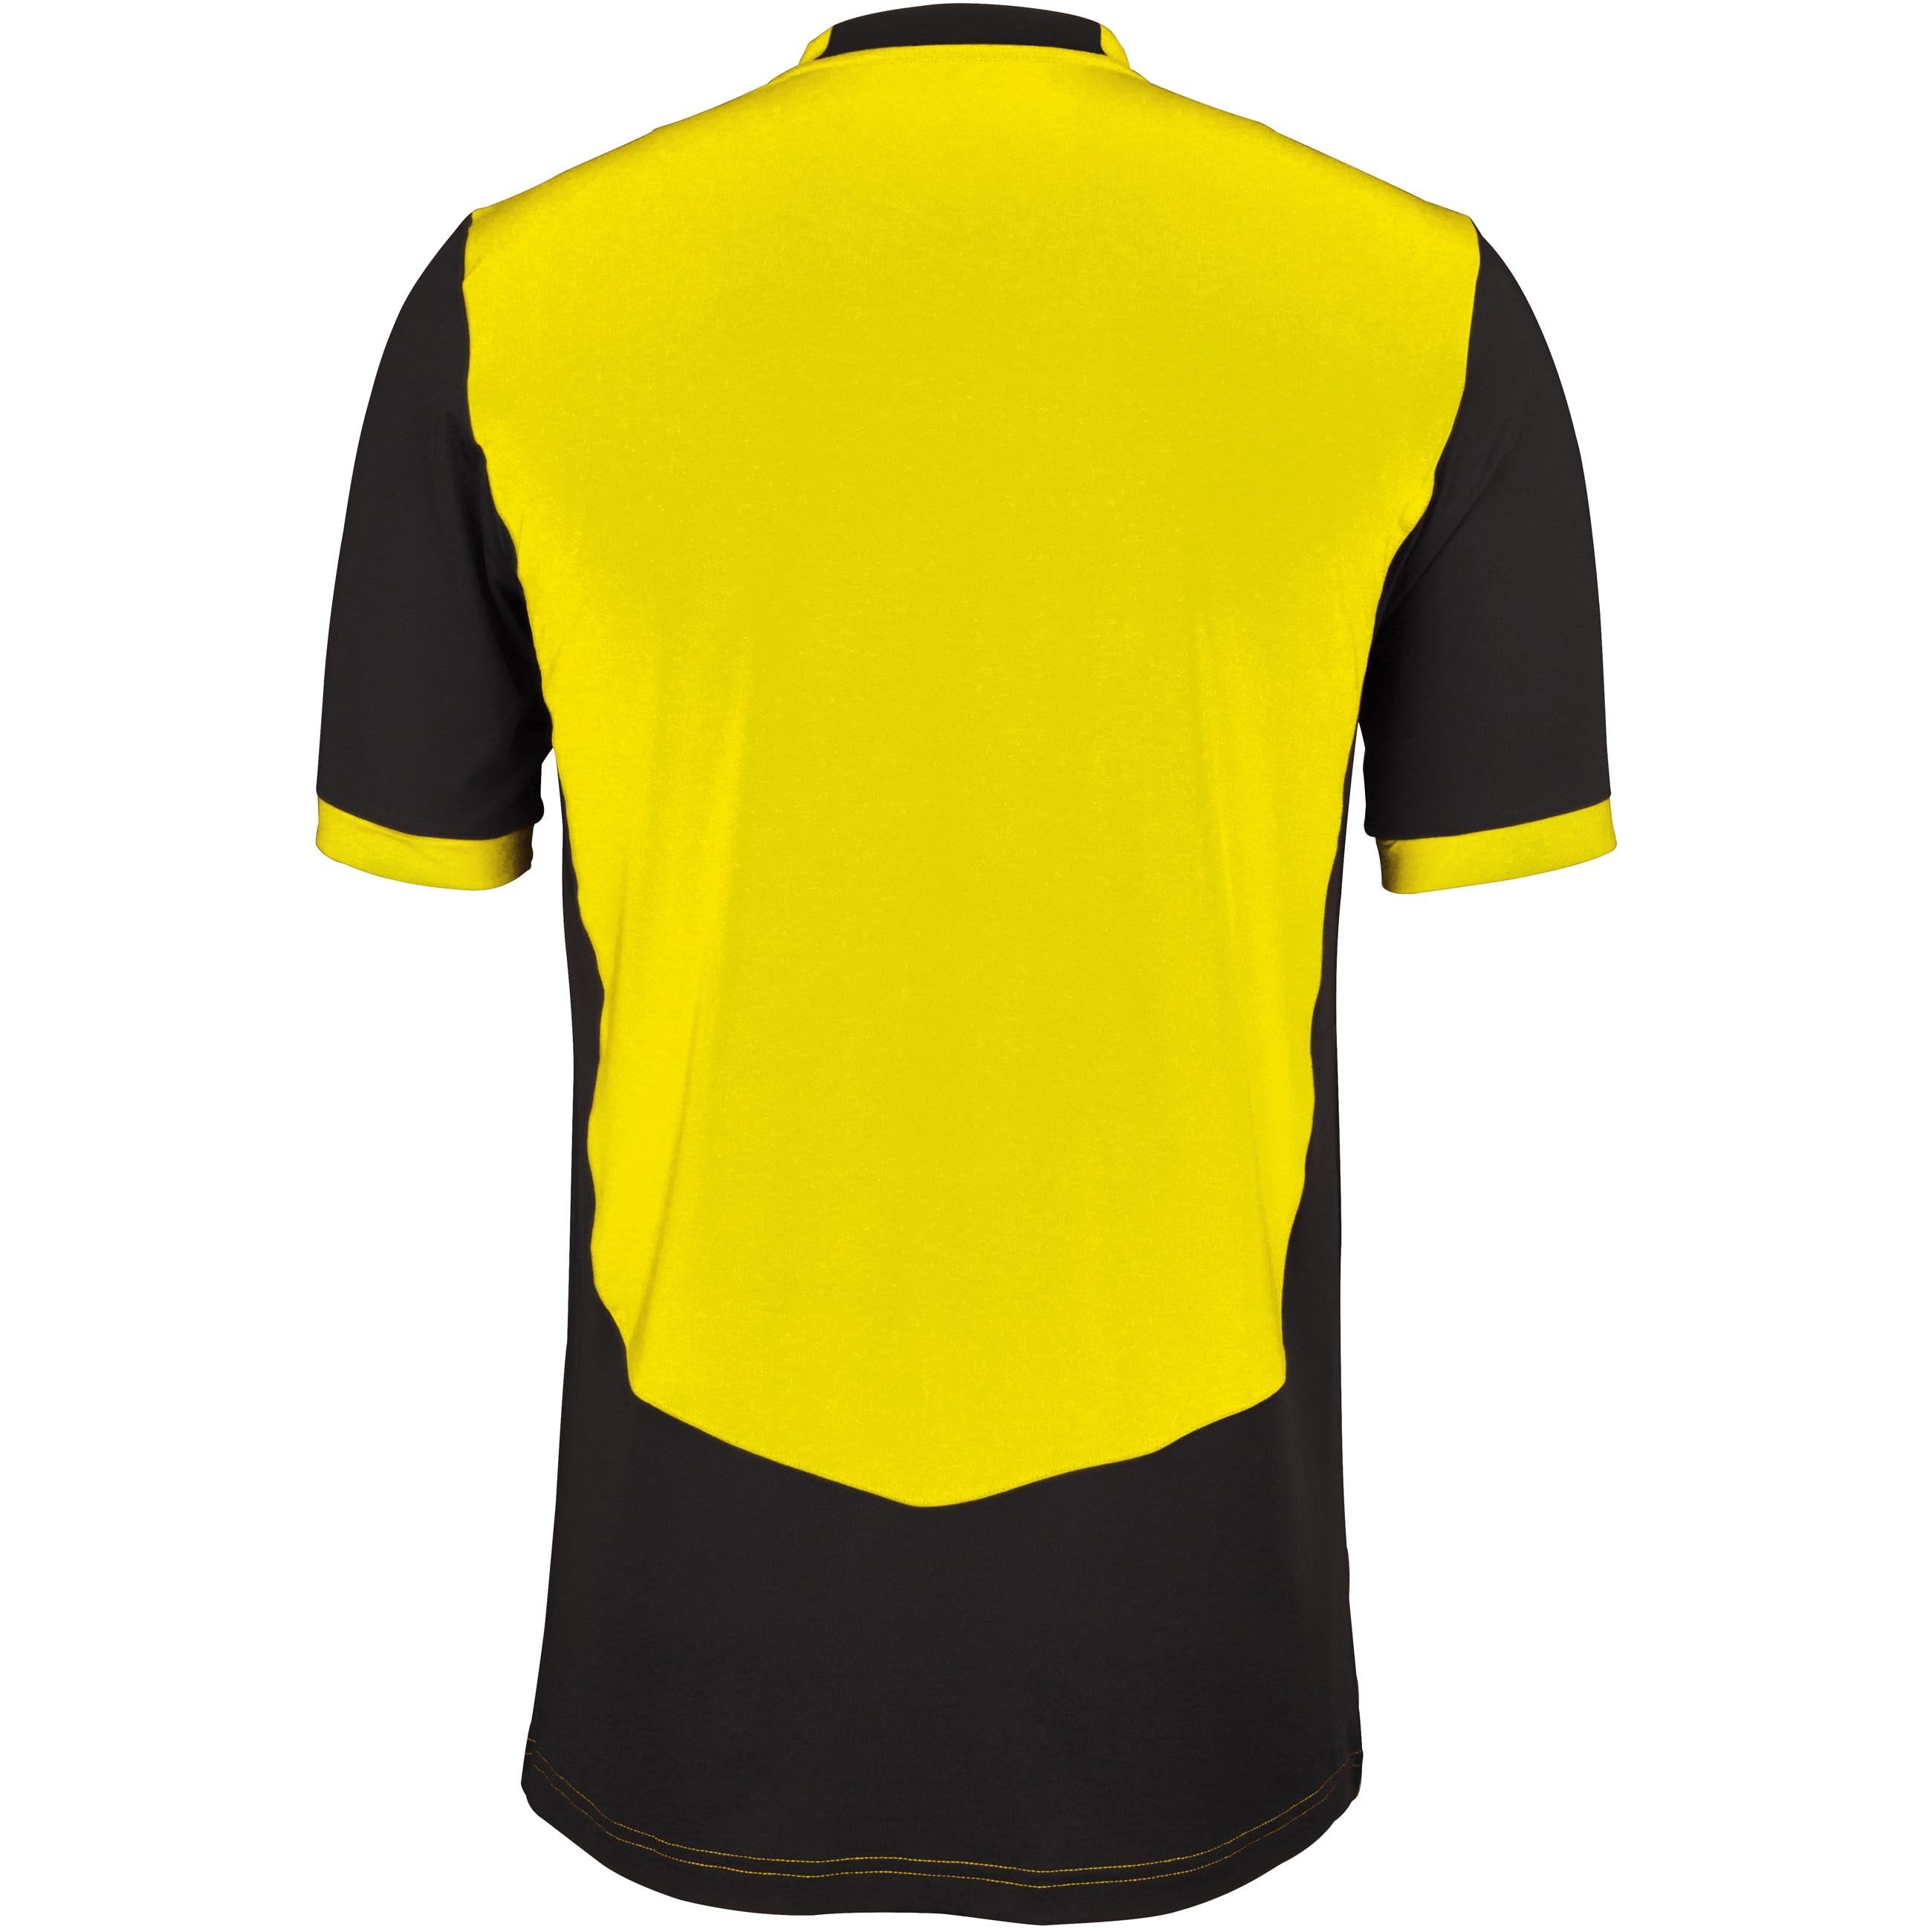 2600 CCFC19 5029205 Shirt T20 Yellow & Black, Back